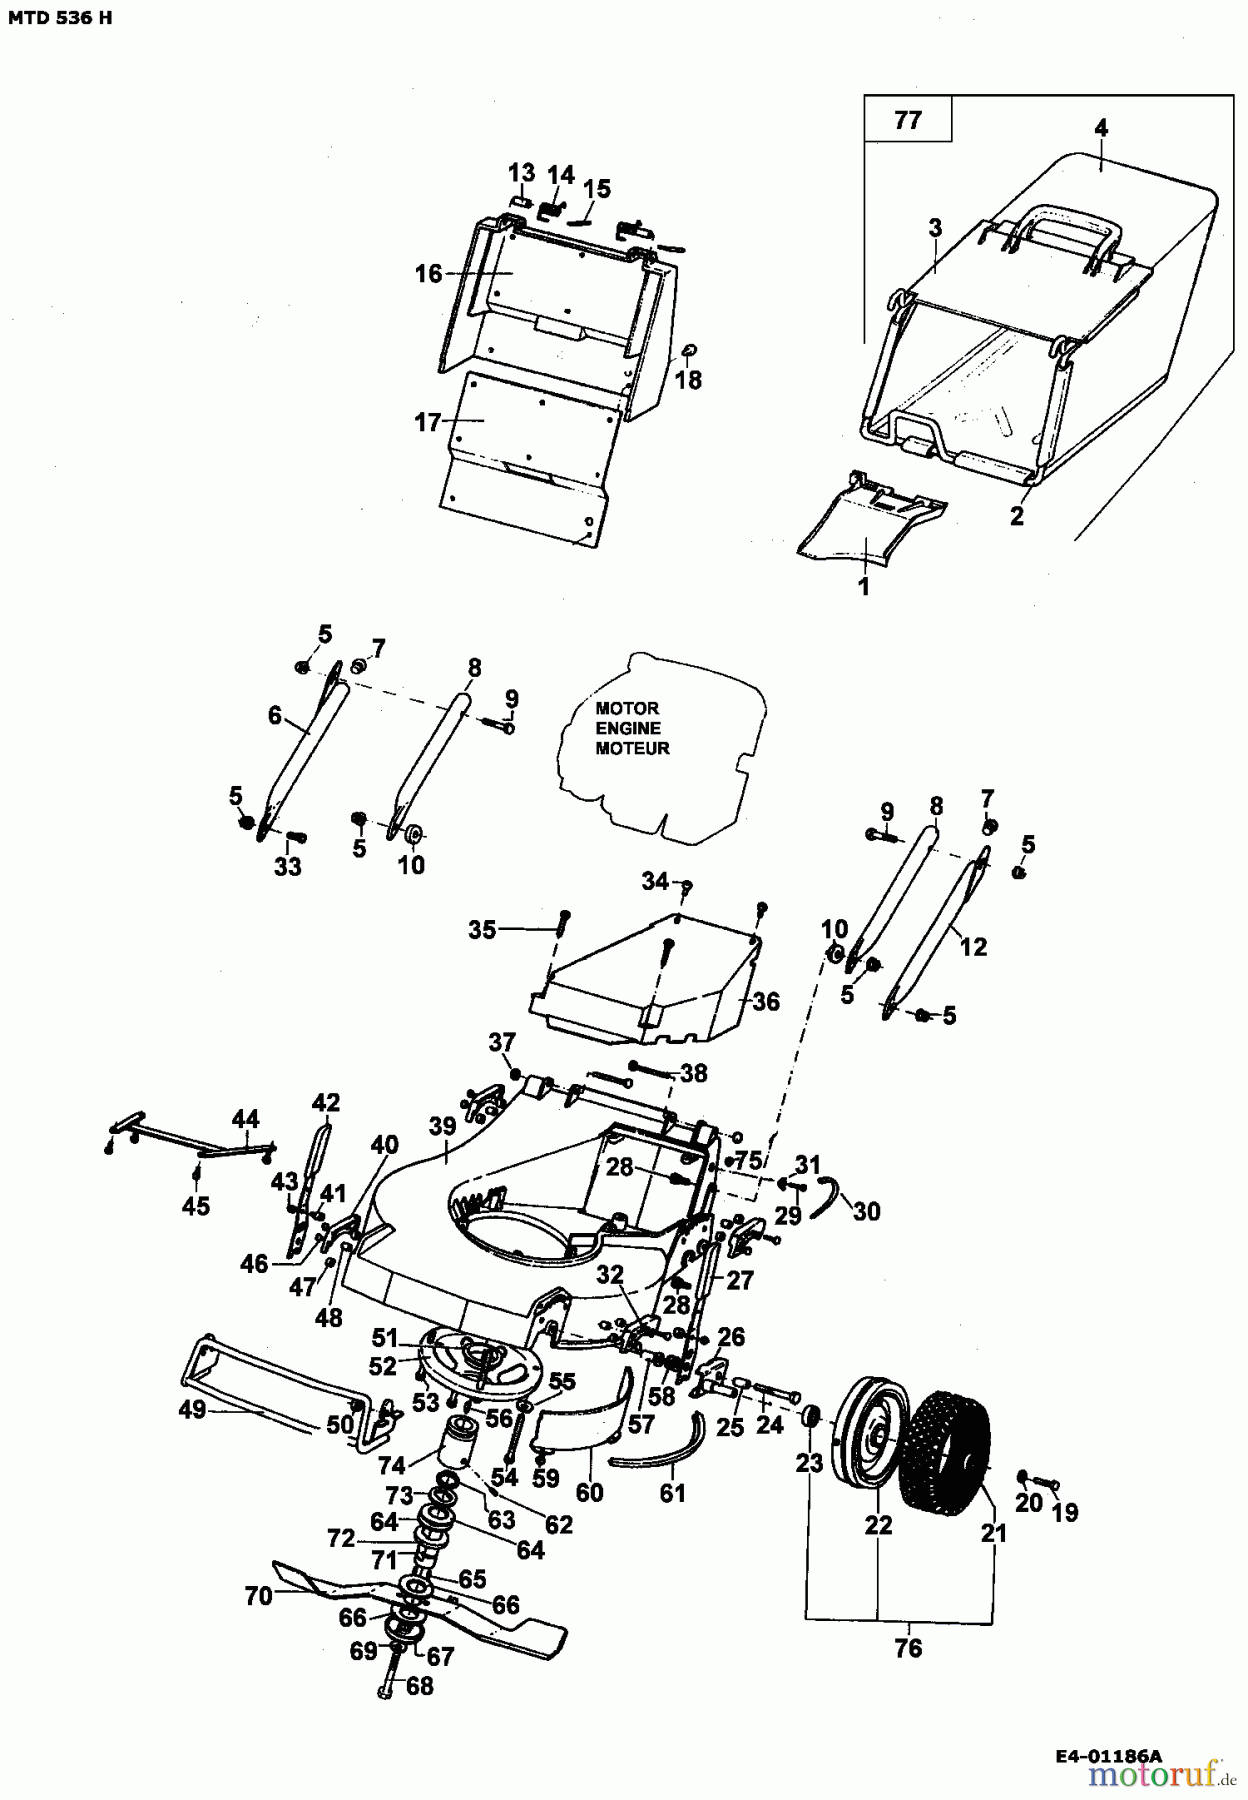  MTD Petrol mower self propelled 536 H 902B530A001  (1994) Basic machine